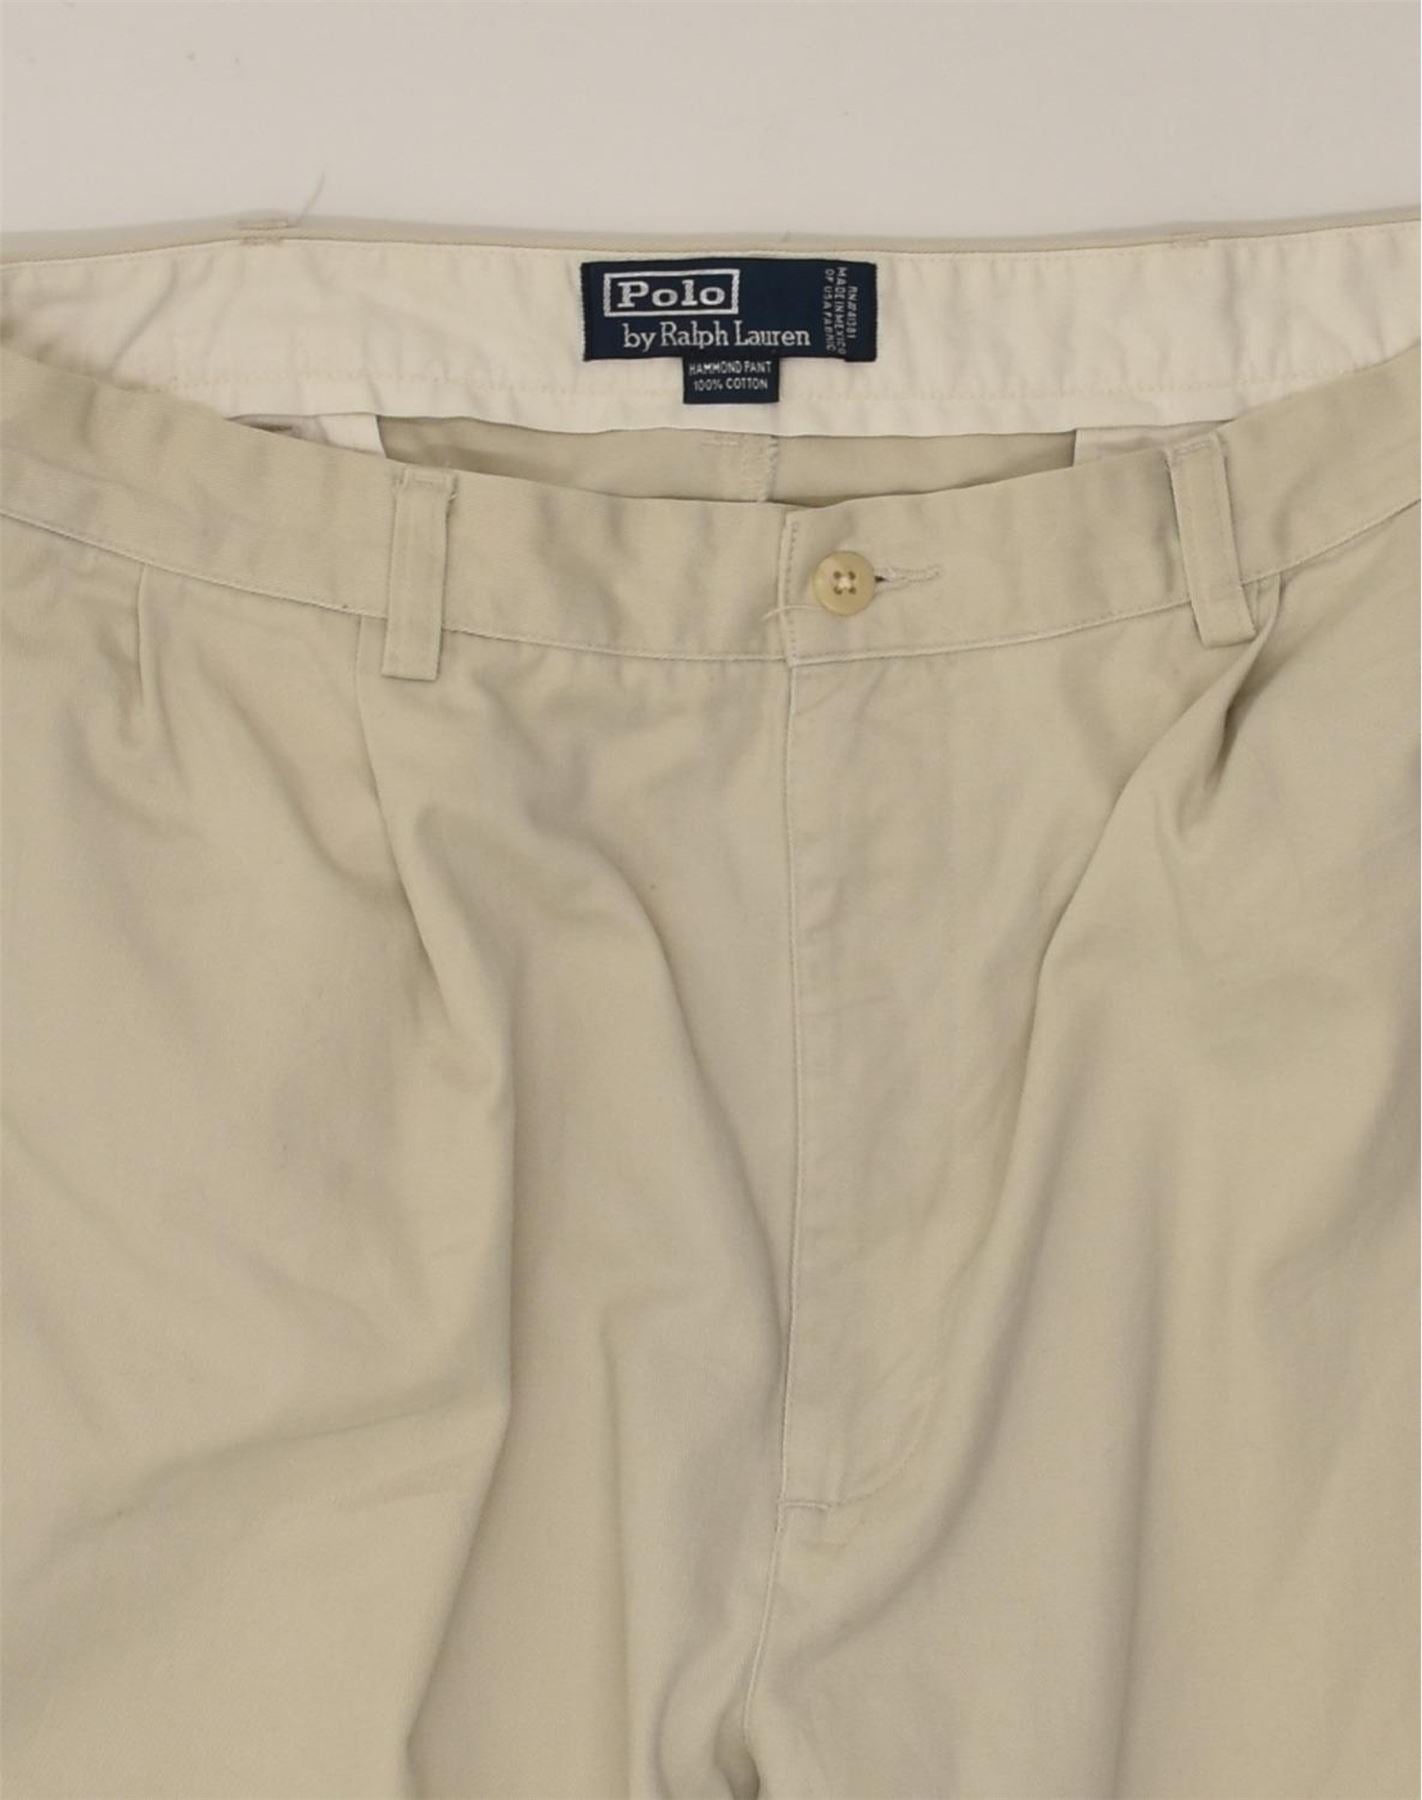 POLO RALPH LAUREN Mens Hammond Pant Pegged Chino Trousers W34 L29